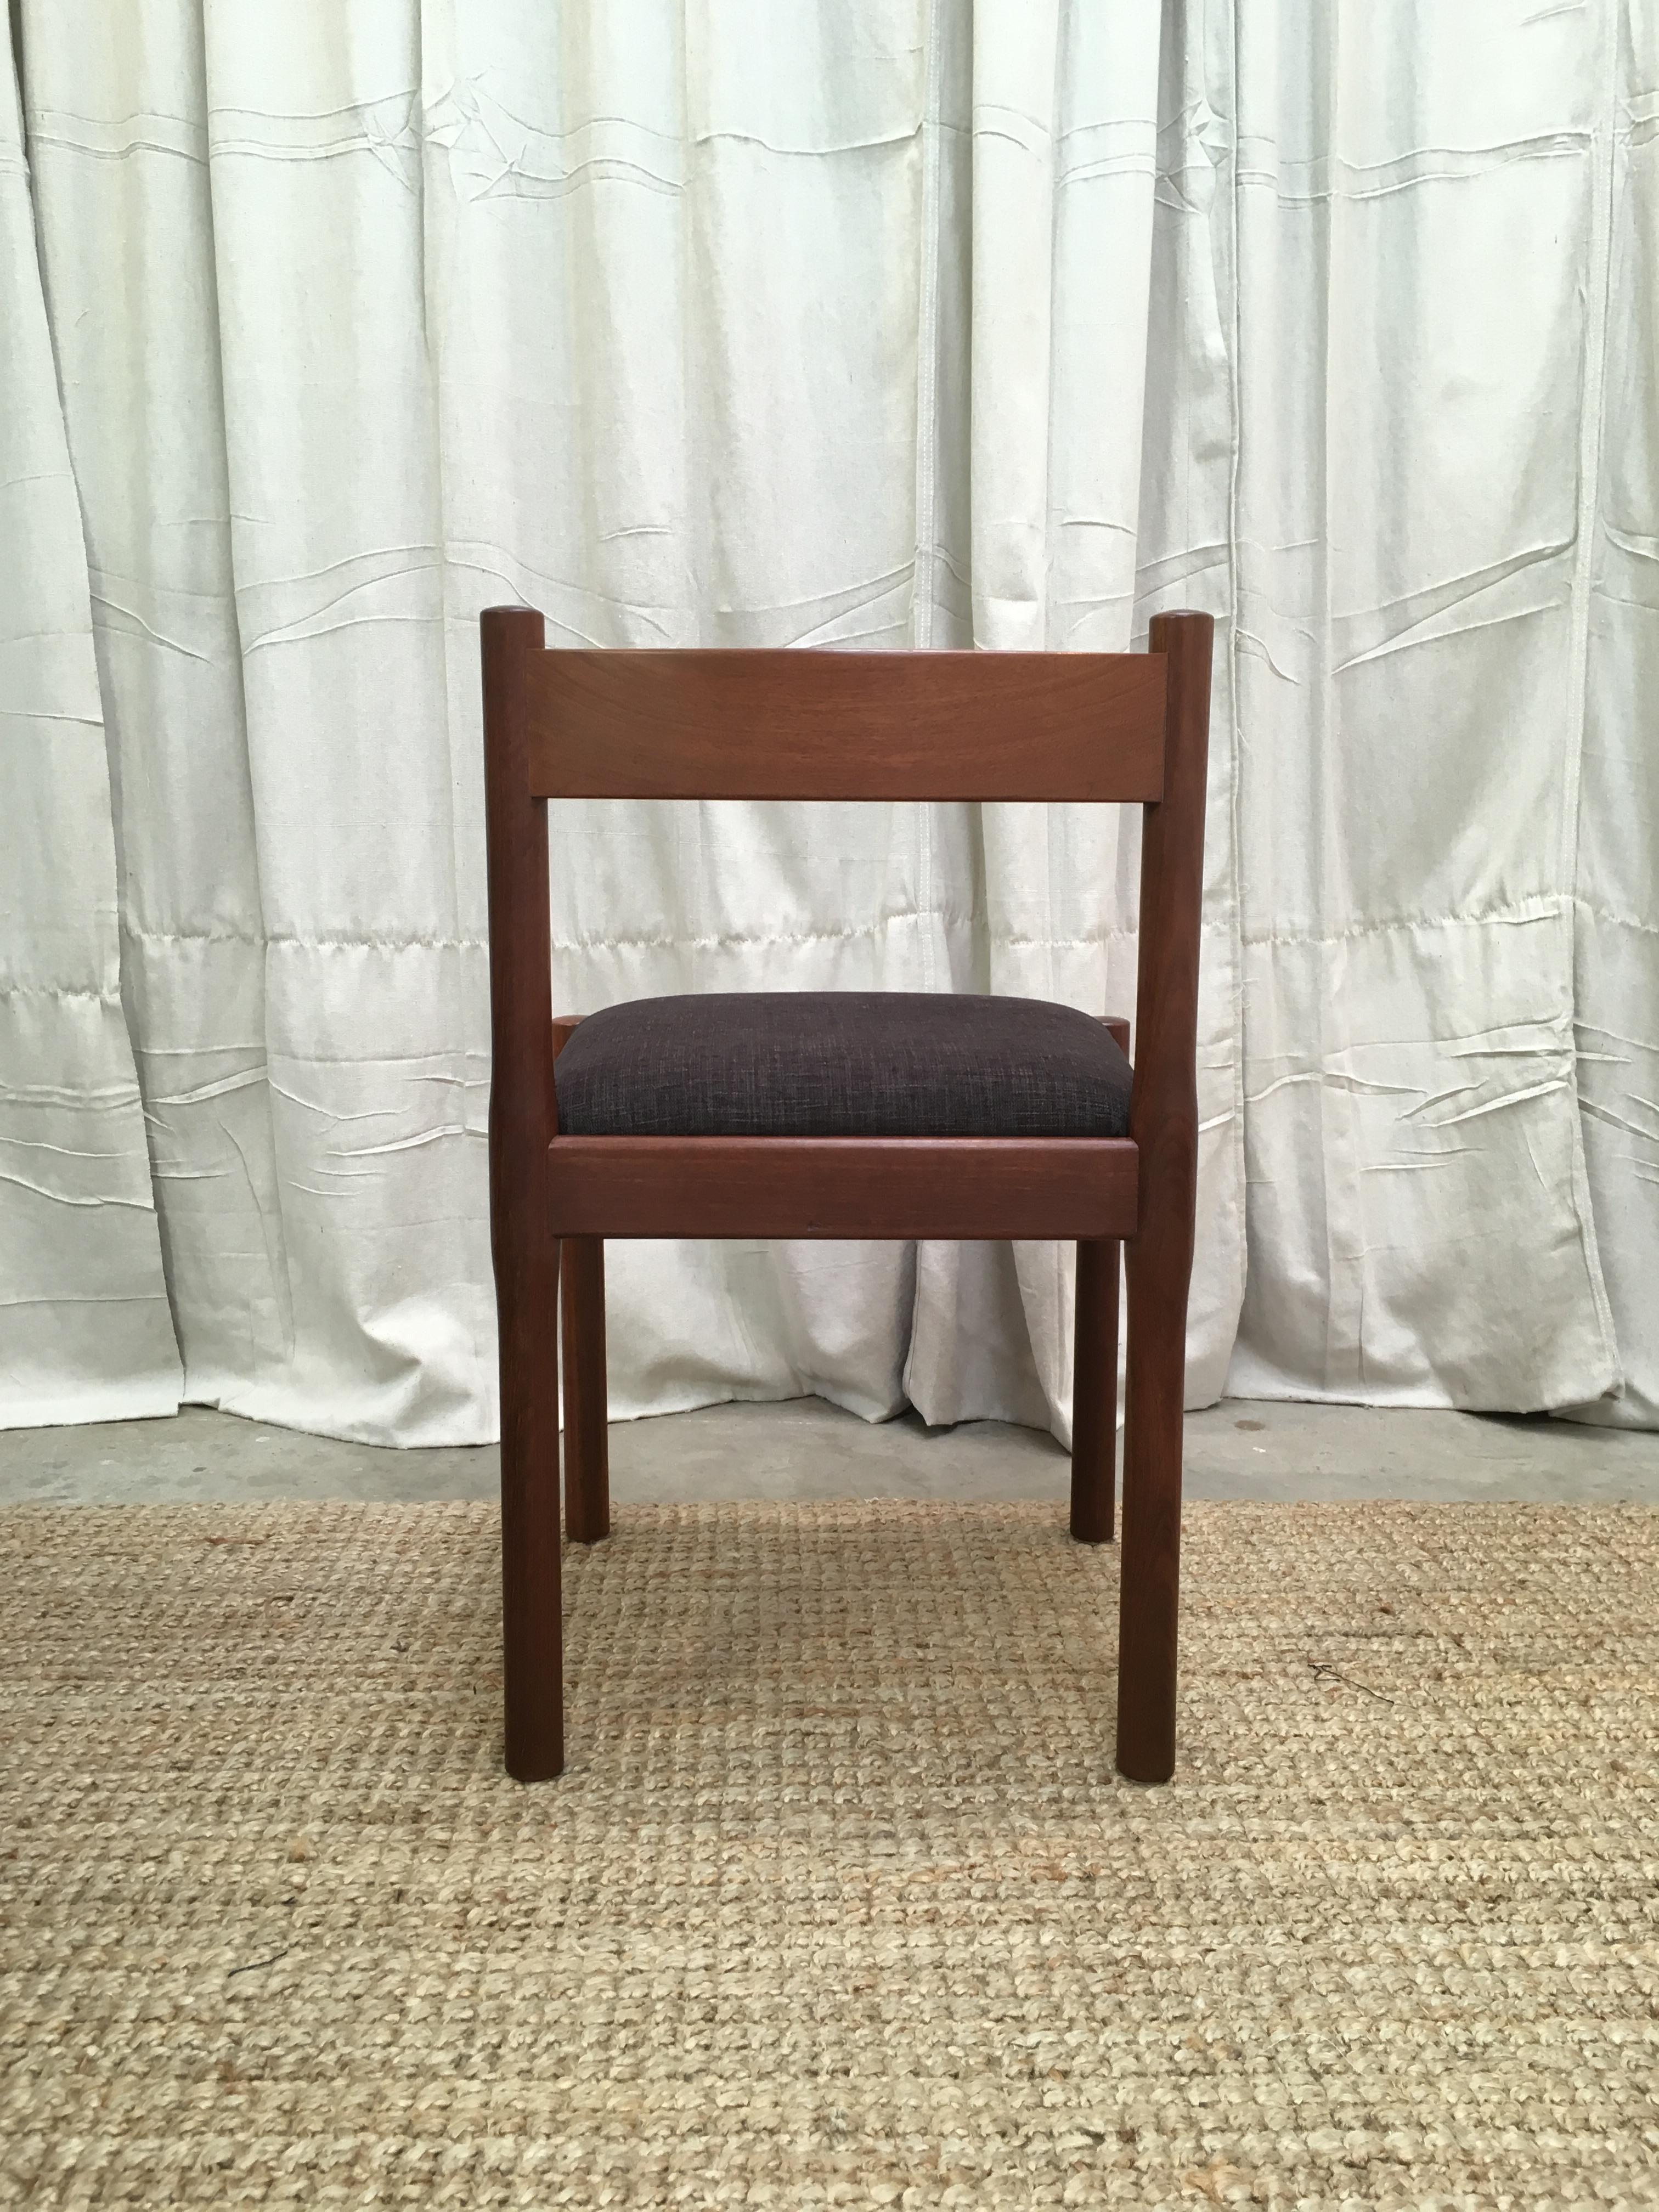 Italian 6 Carimate Chairs Magistretti , Copies by CATT Furniture, 1967 In Jarrah Timber